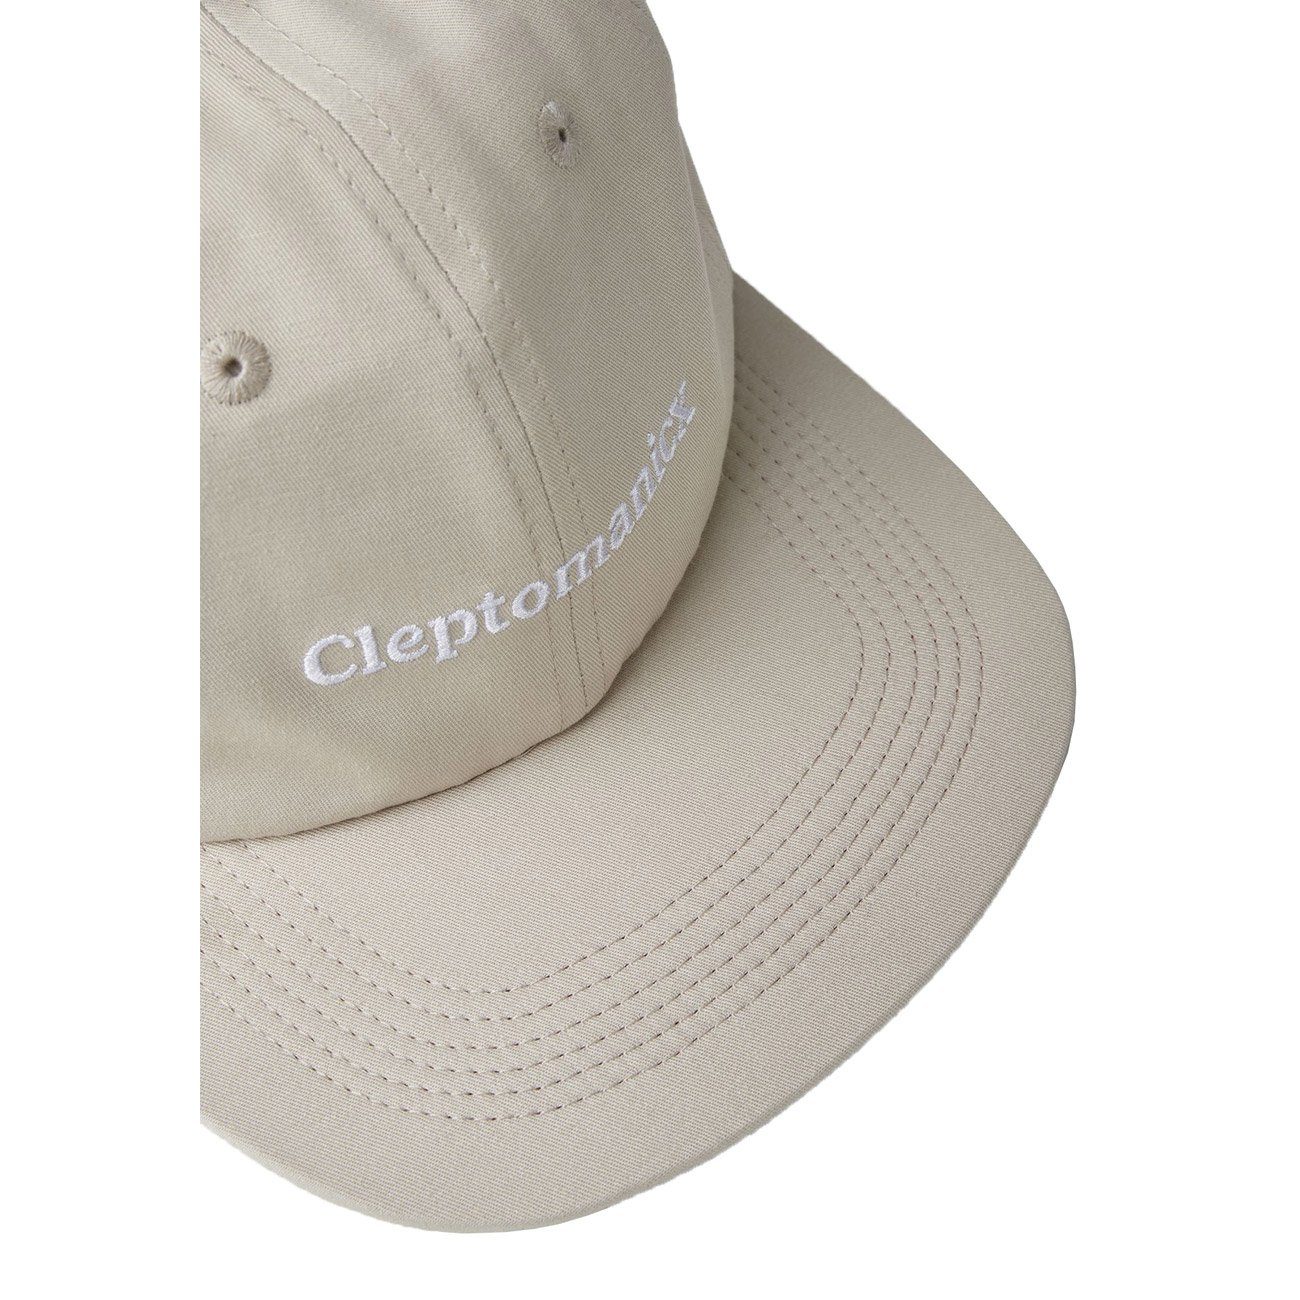 Cleptomanicx Baseball Cap Transit Team Cap